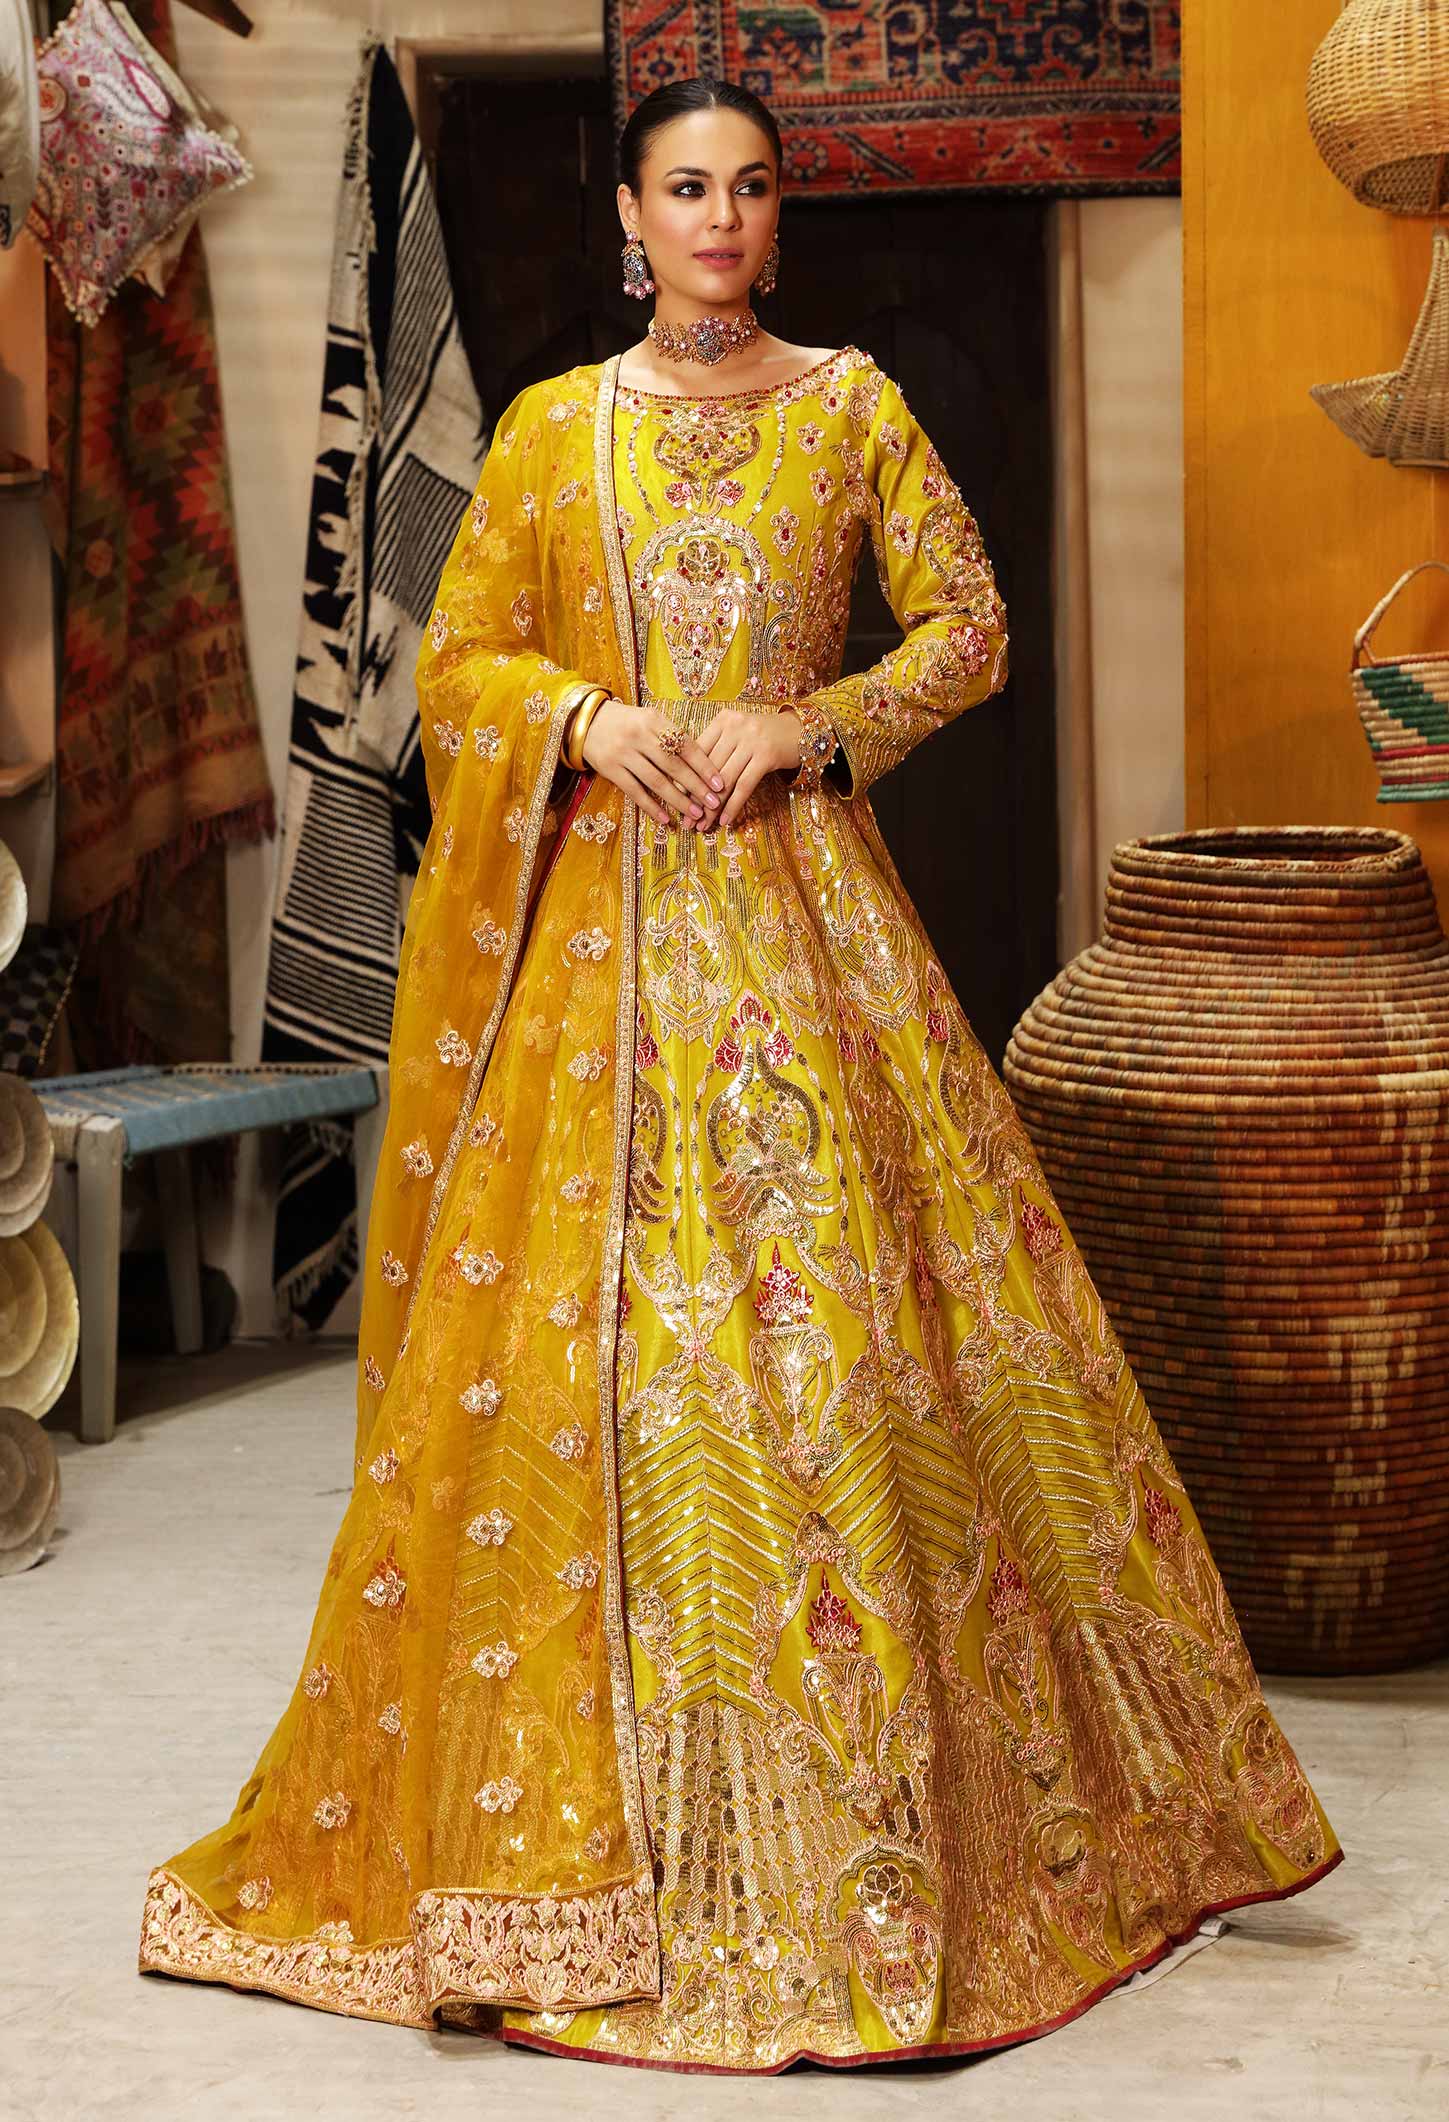 Waqas Shah | Ishq Naama | SUNSHINE - Khanumjan  Pakistani Clothes and Designer Dresses in UK, USA 